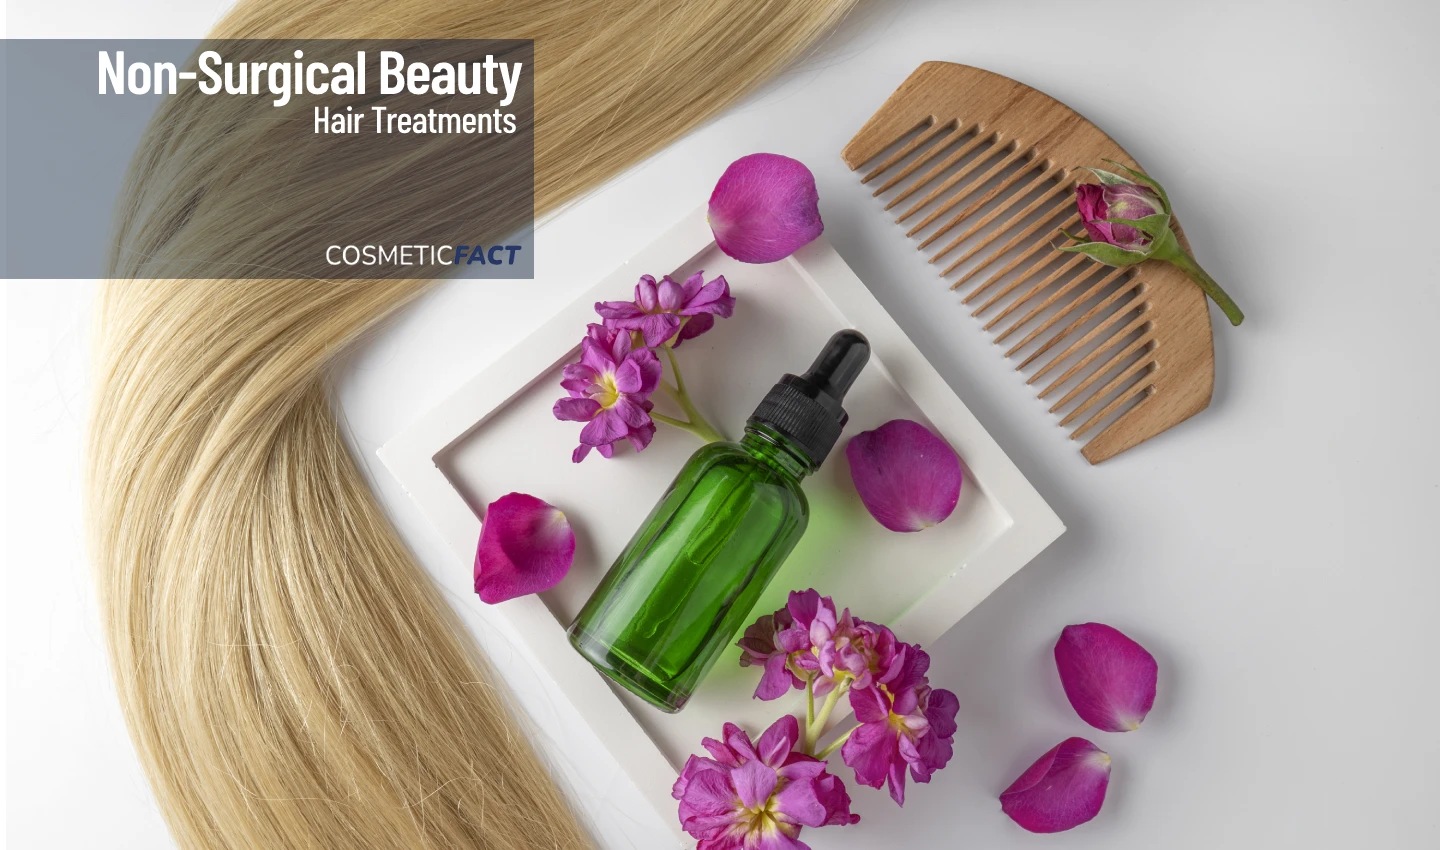 An image showcasing various nutrition oils for hair nourishing treatments, including coconut oil, argan oil, and jojoba oil.